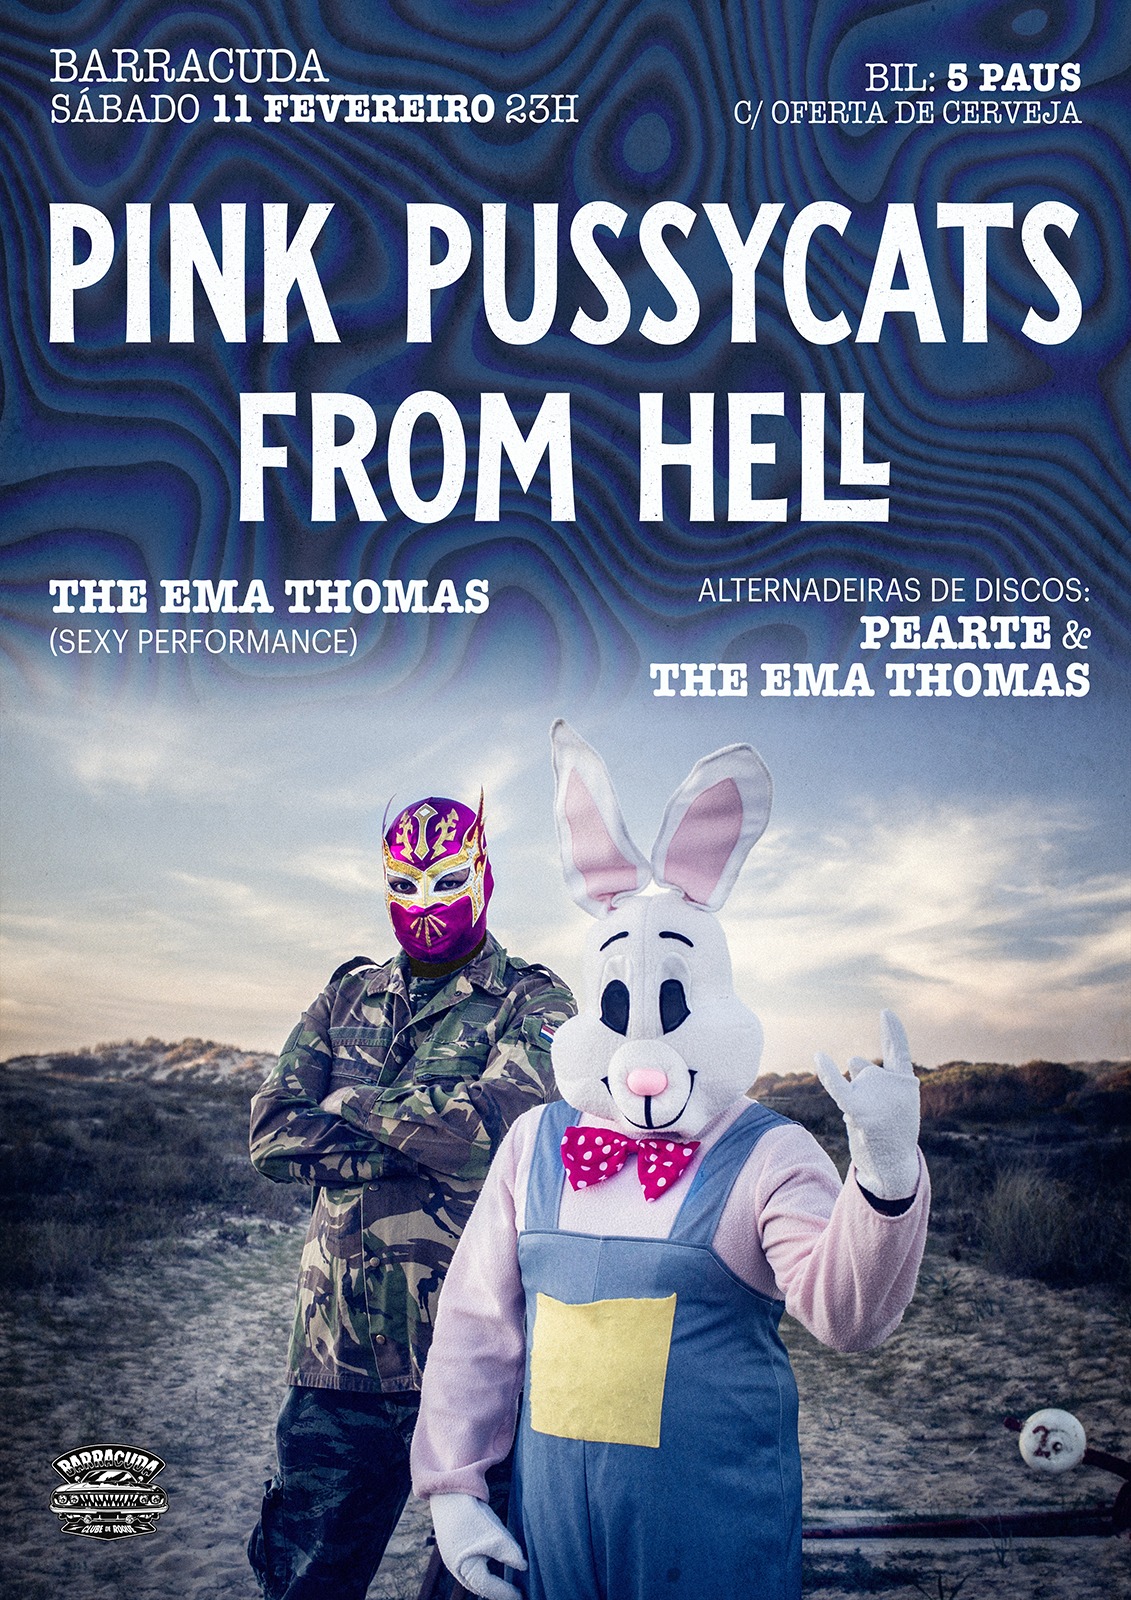 Pink Pussycats From Hell - Alternadeiras de discos Pearte & The Ema Thomas